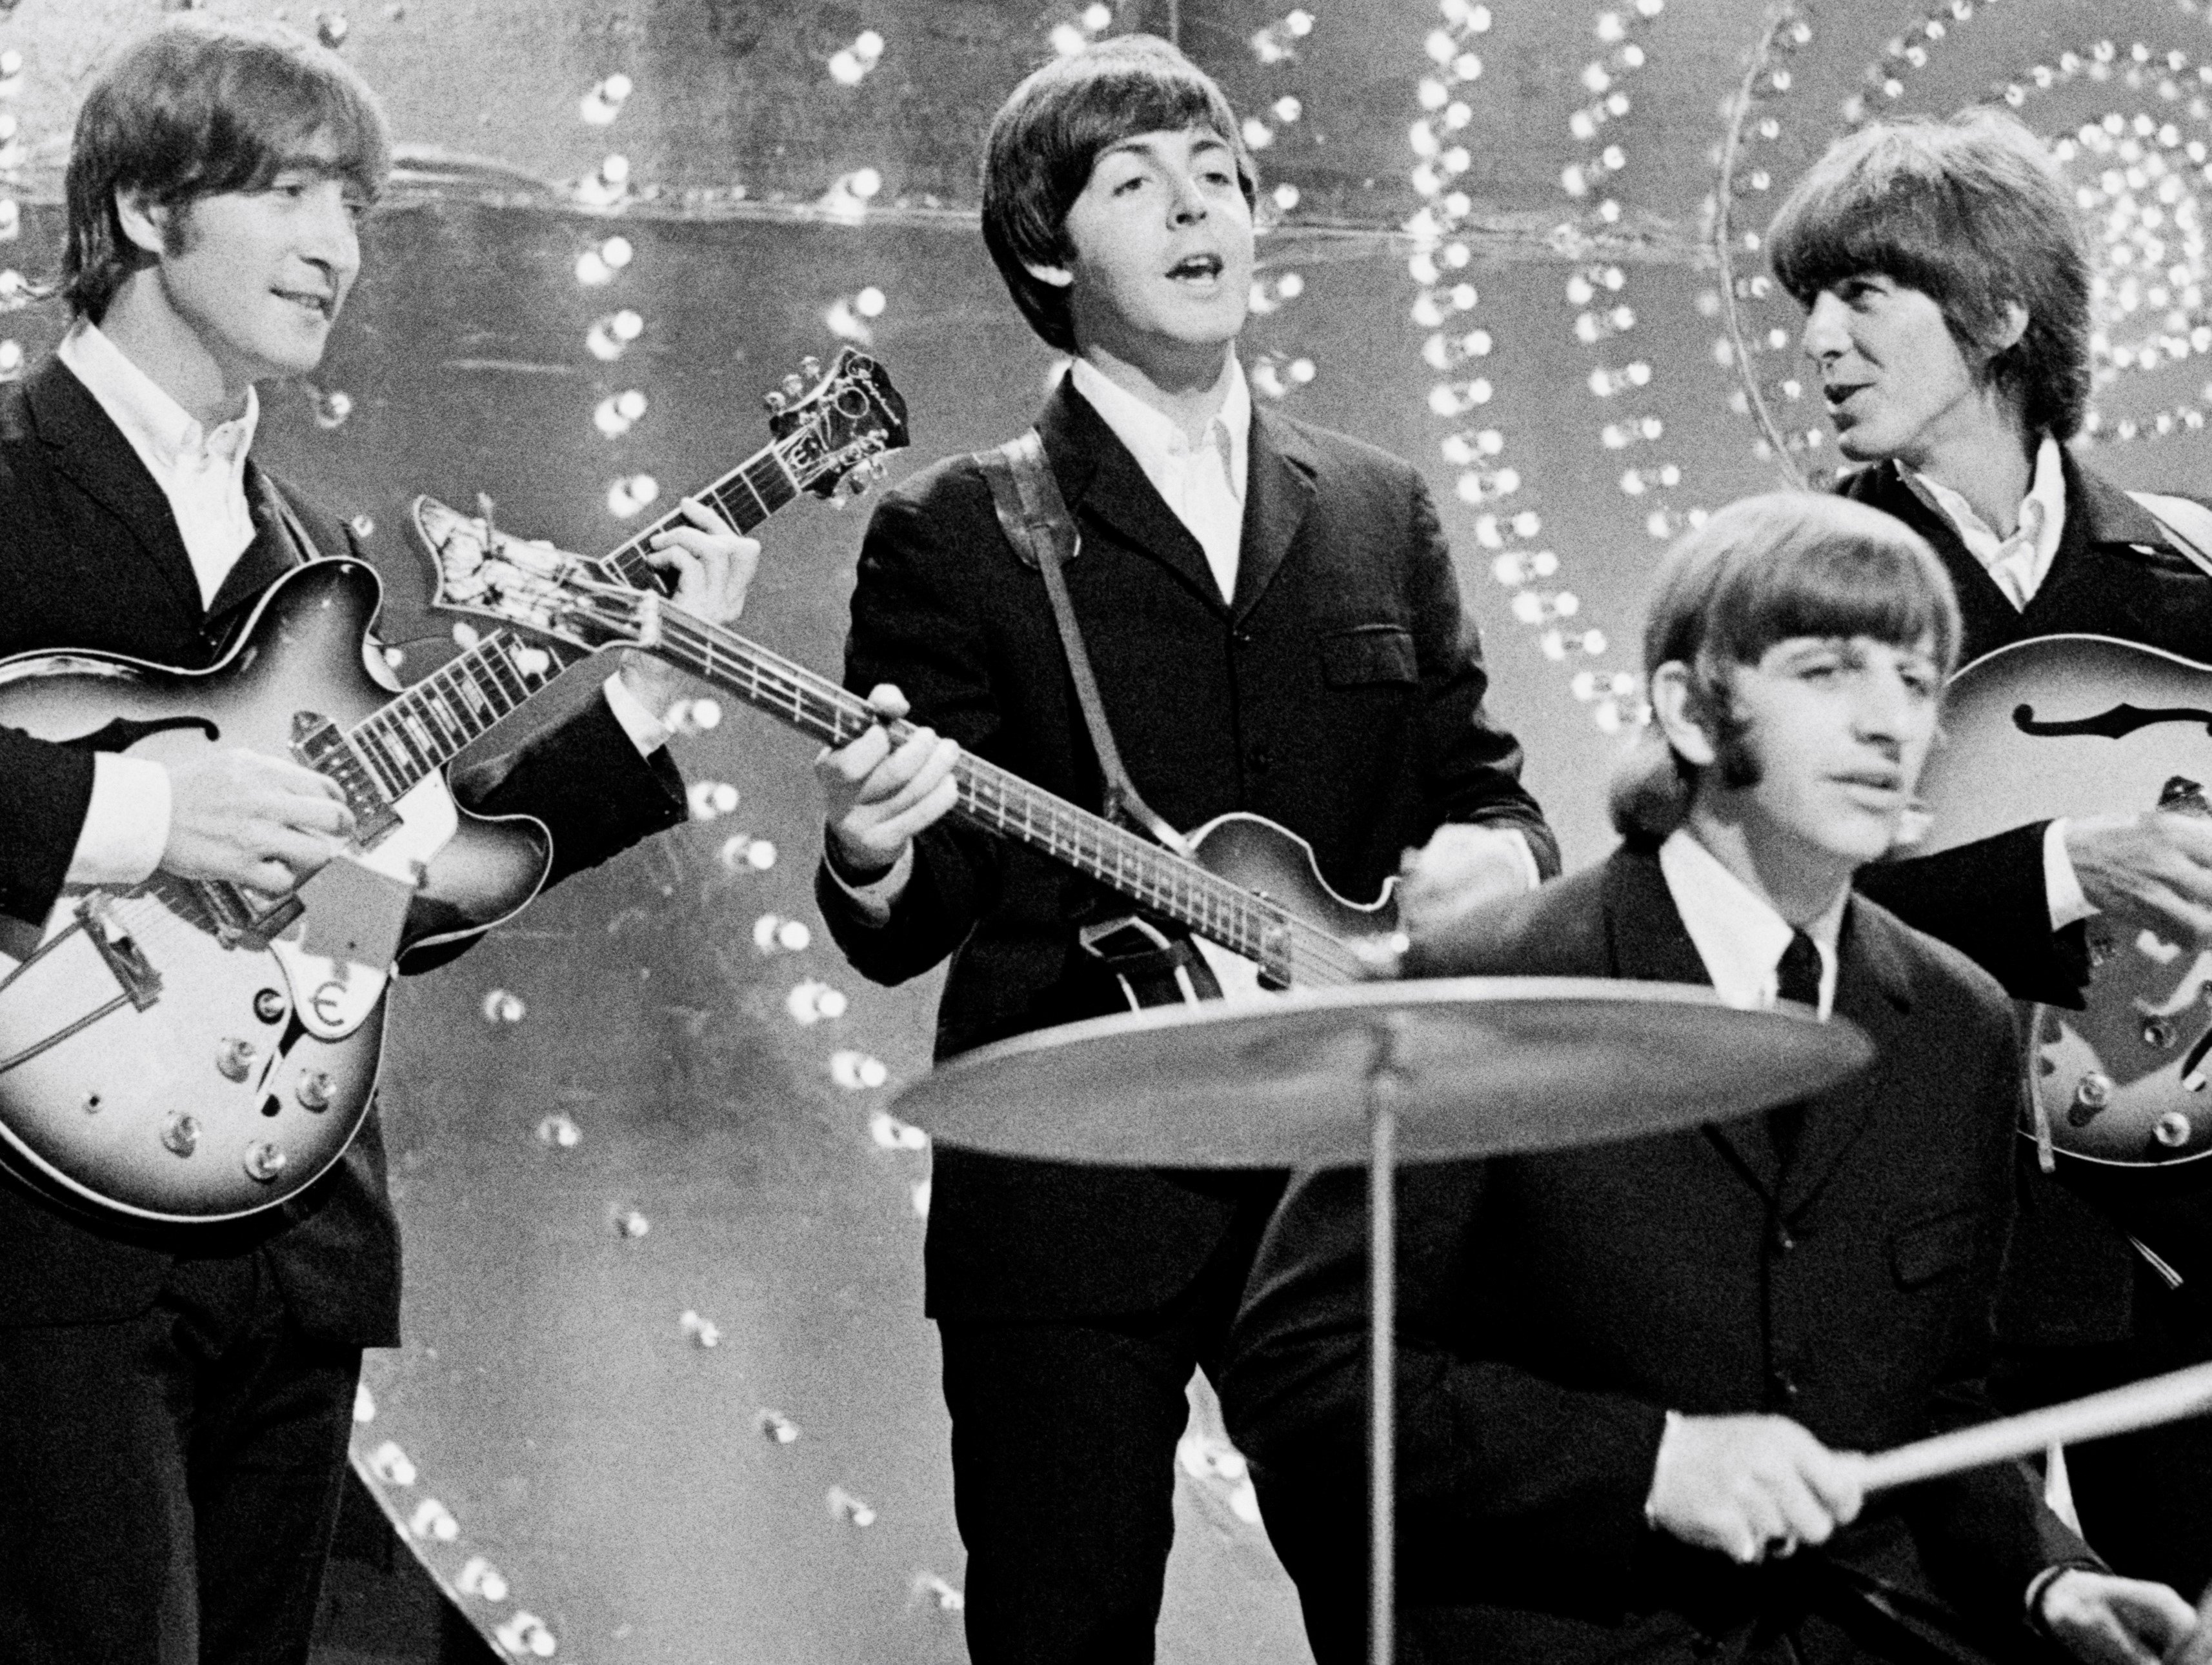 The Beatles John Lennon, Paul McCartney, Ringo Starr, and George Harrison playing songs